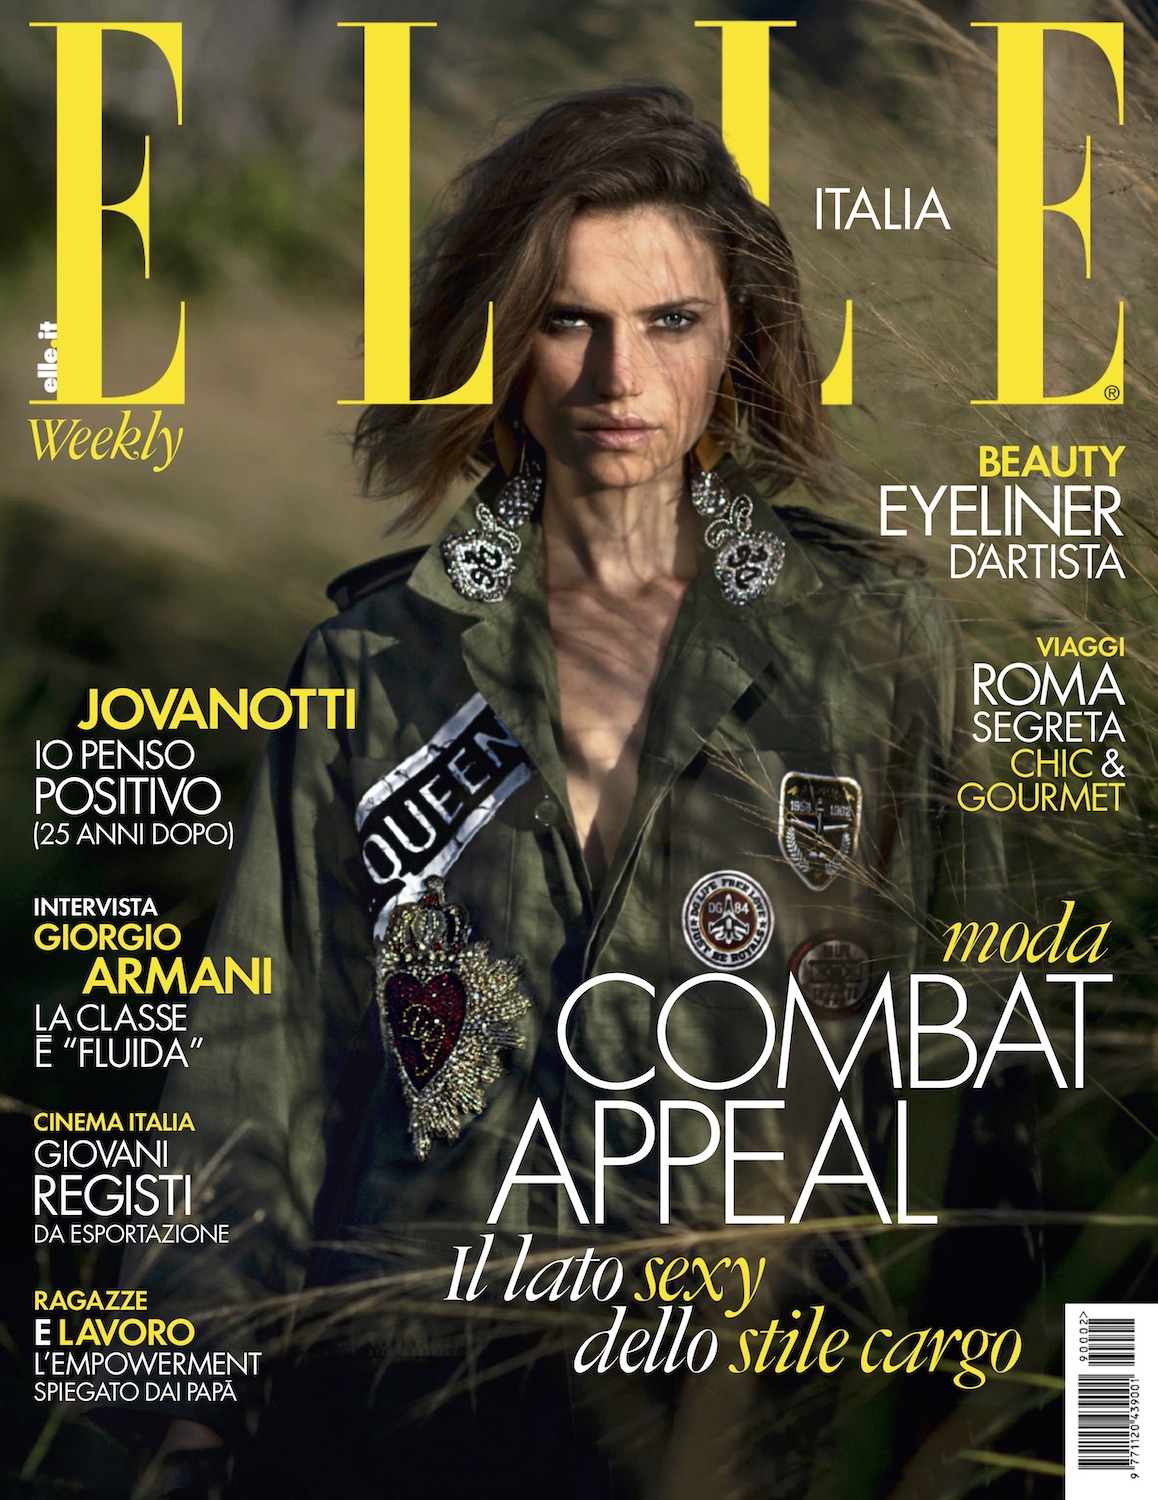 Cato Van Ee for Elle Italia Jan 2019 (2).jpg